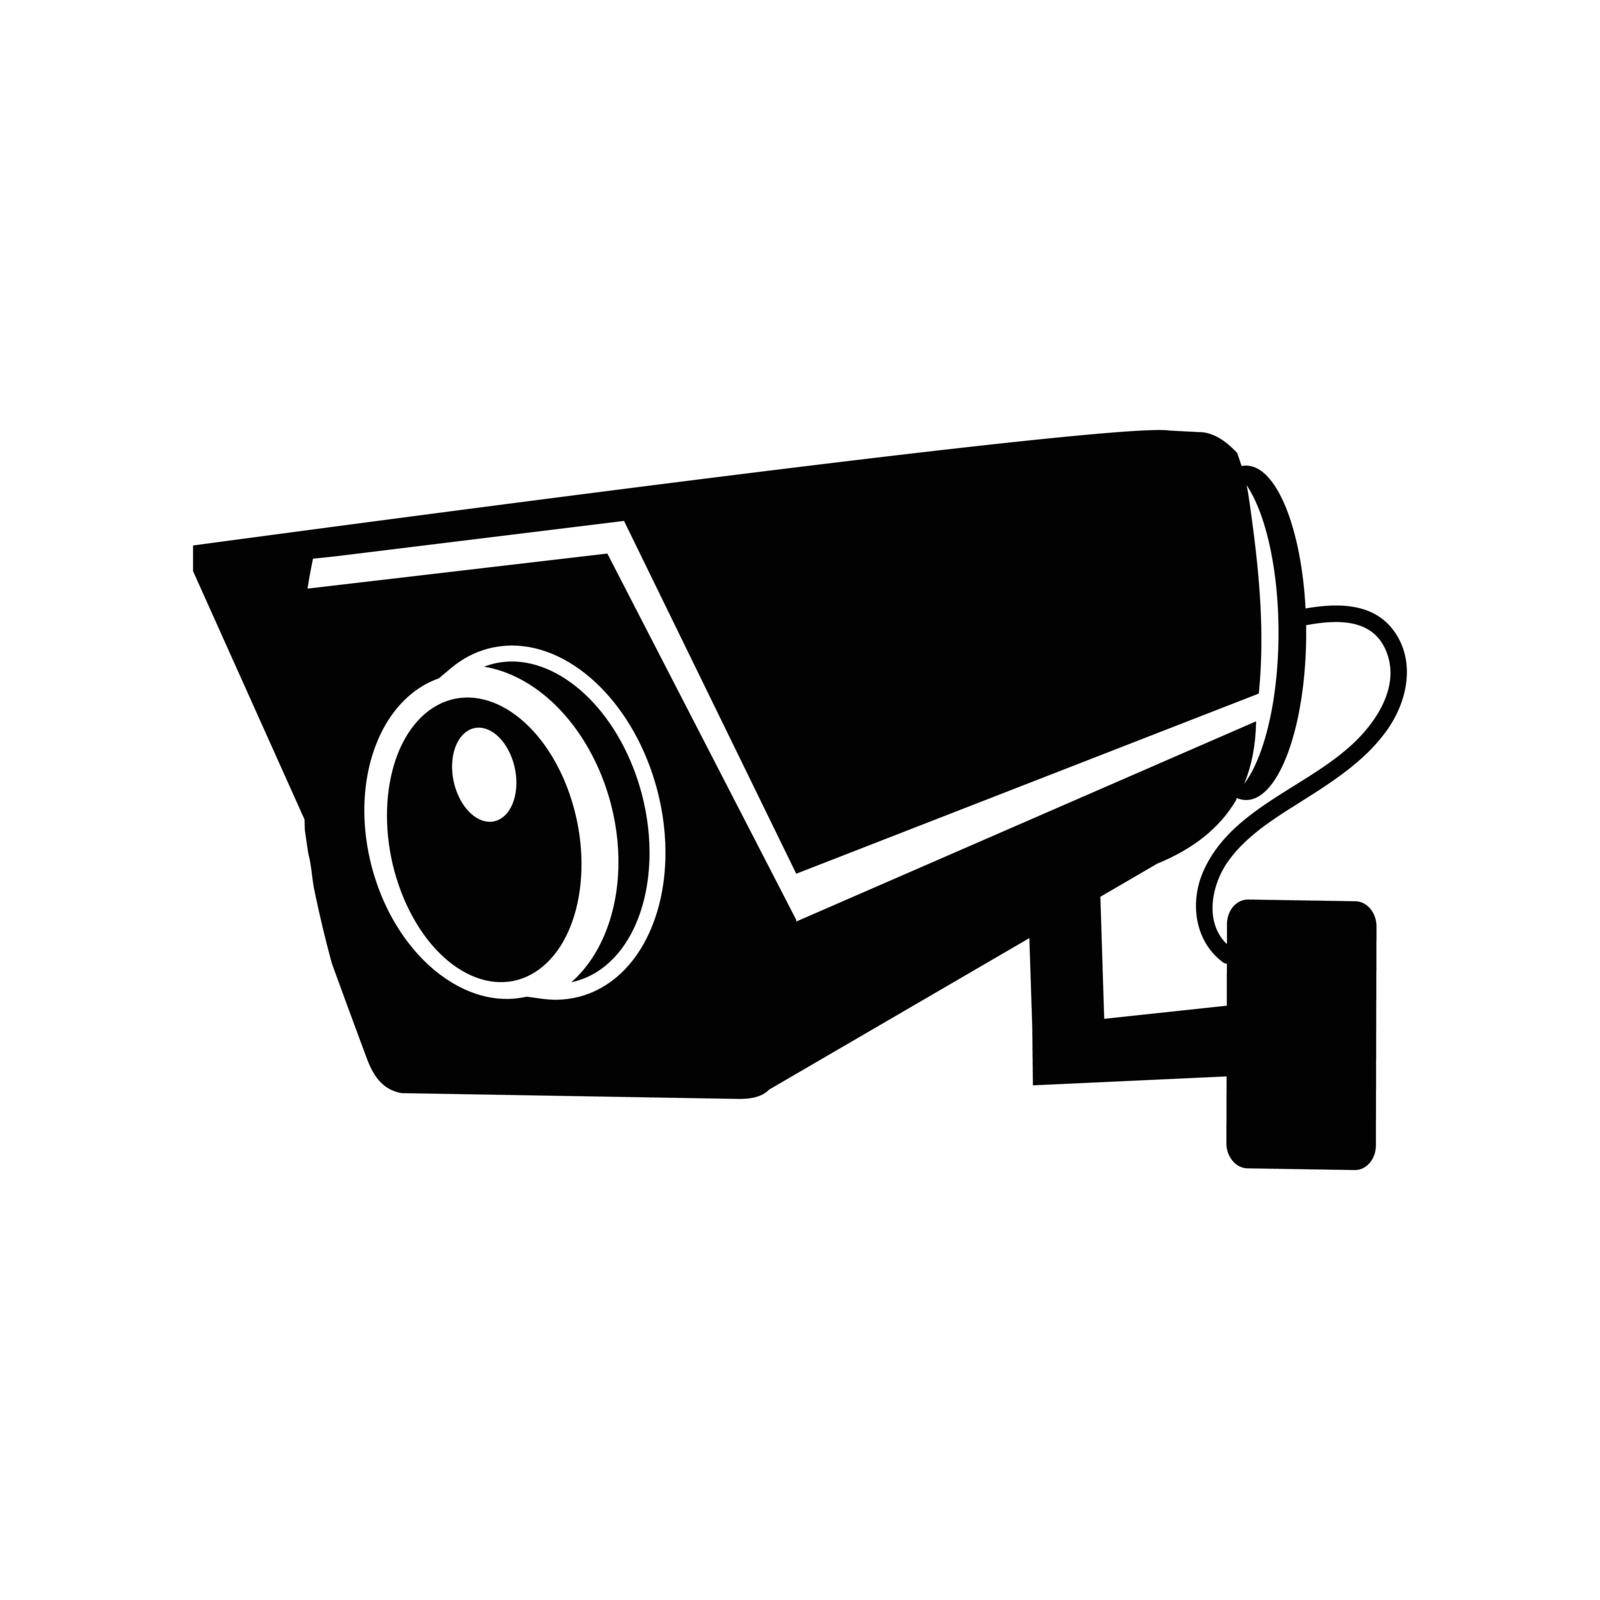 CCTV Security camera  isolated on white background icon